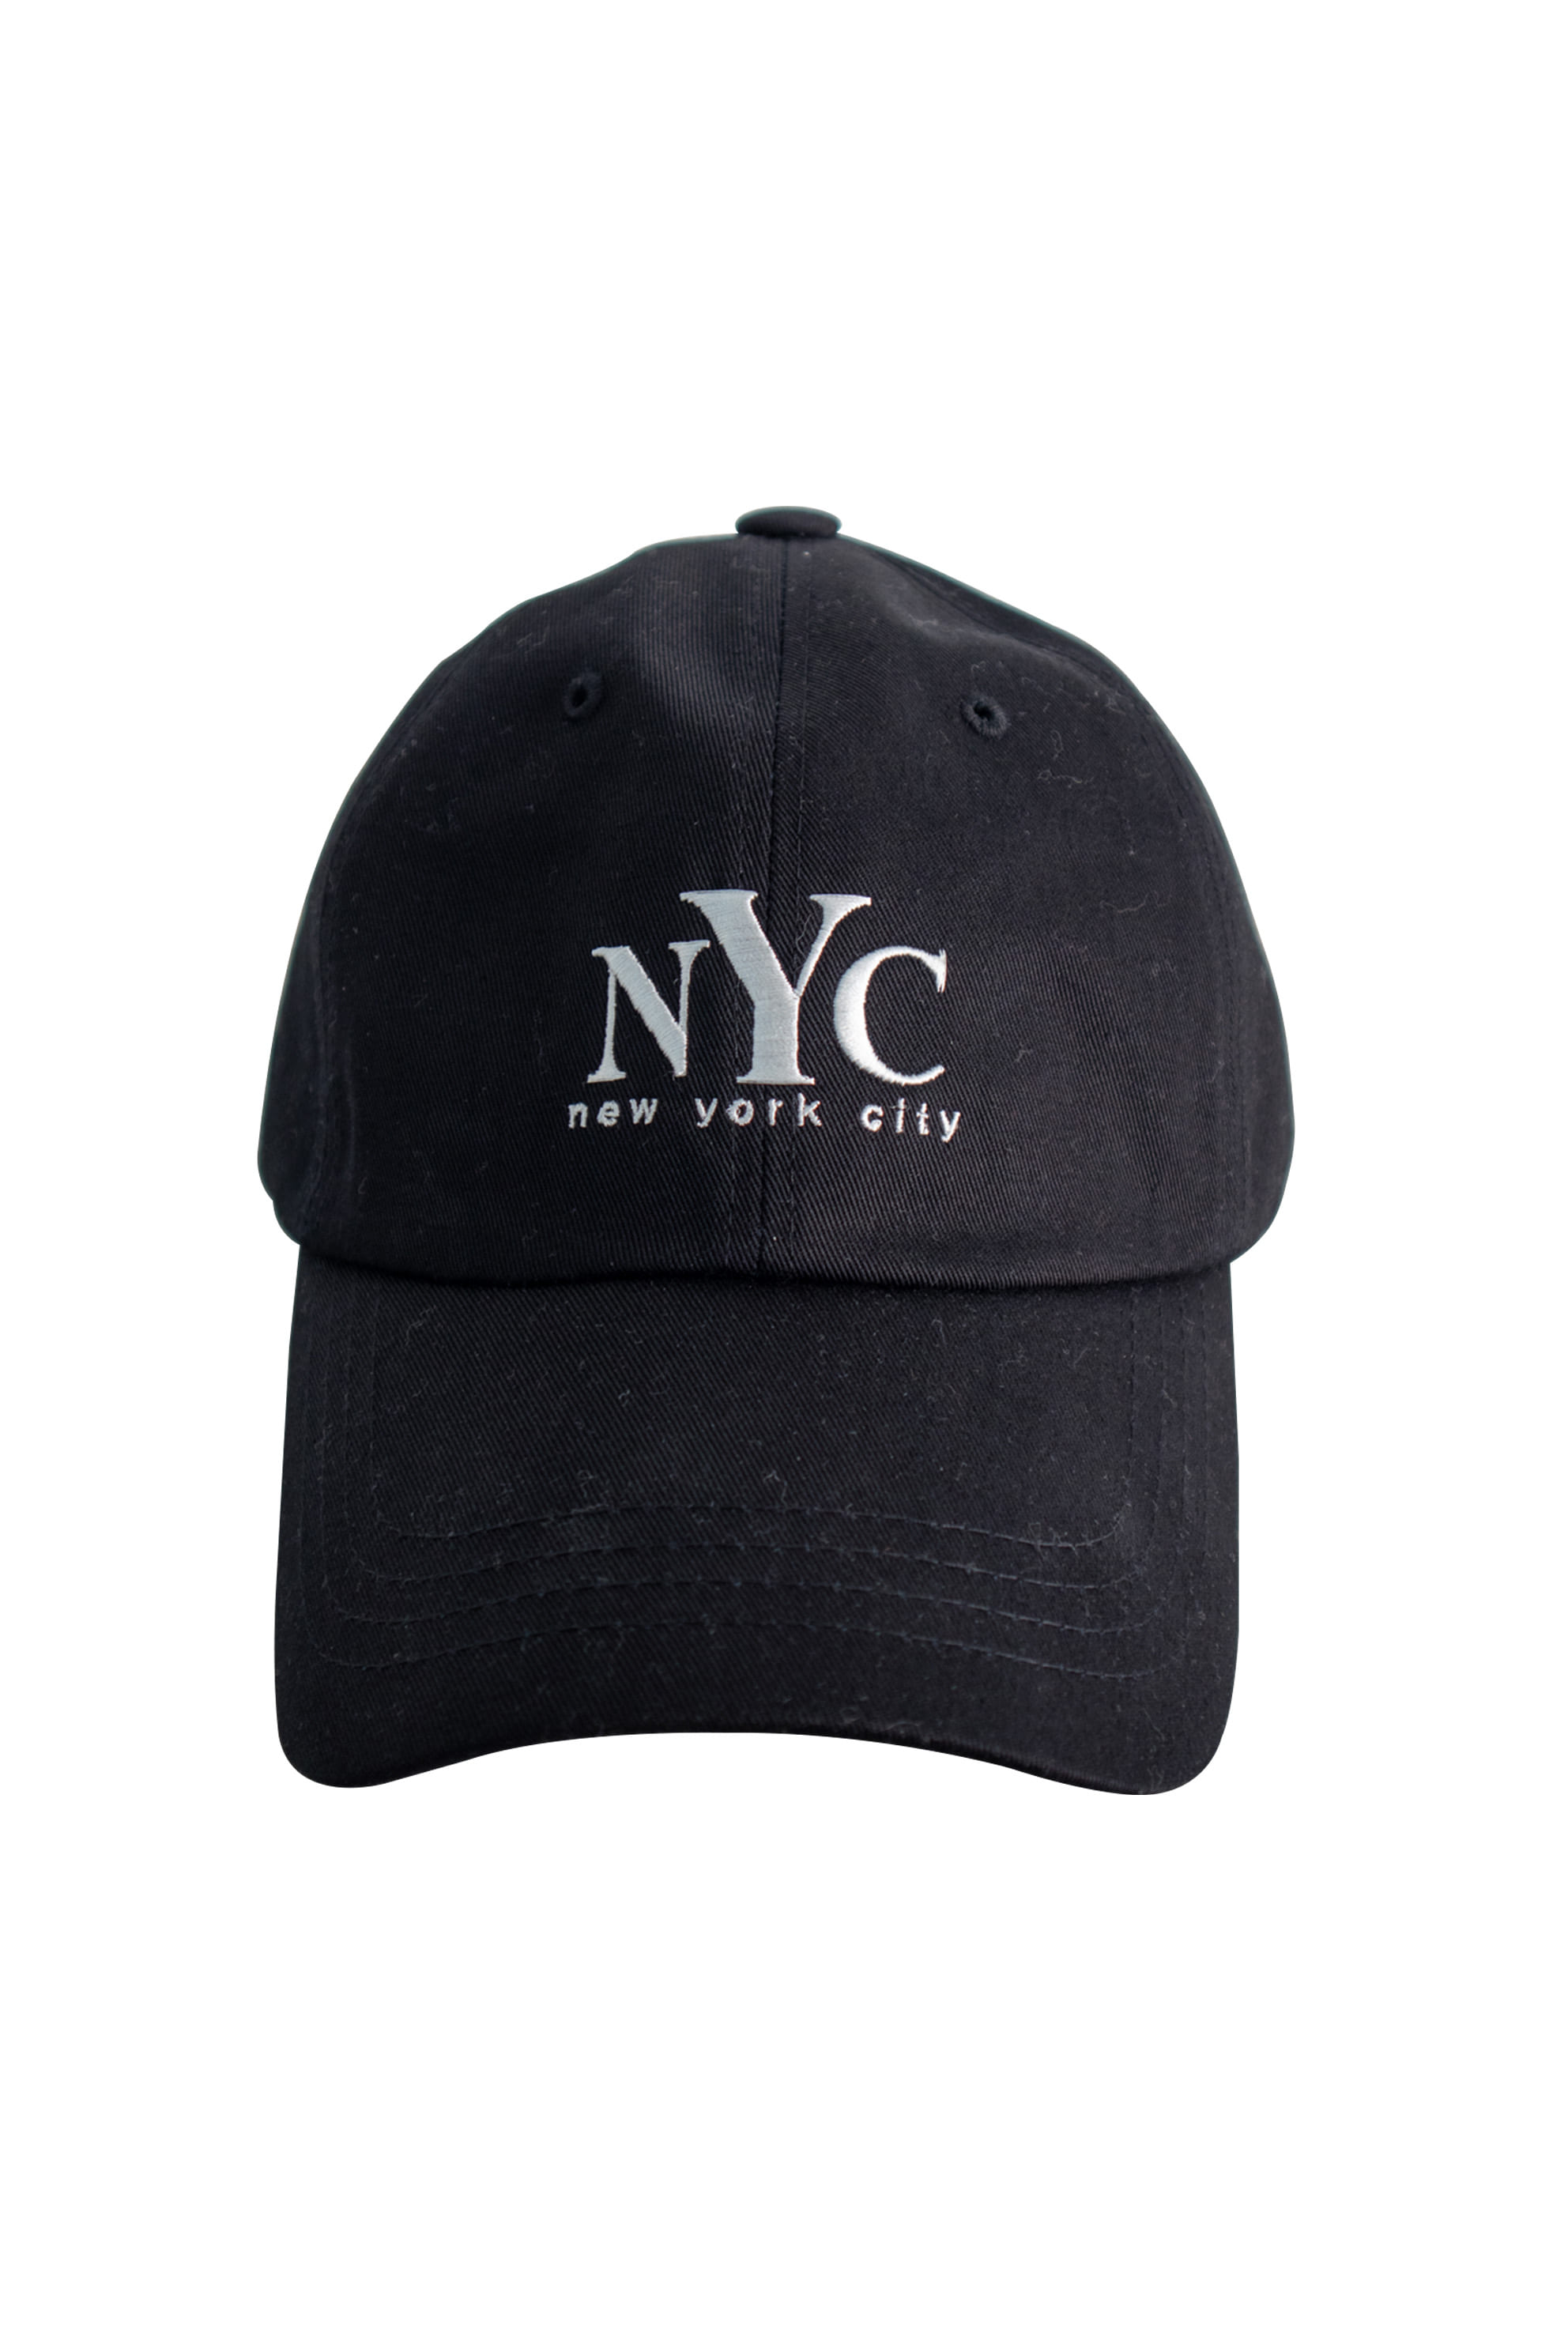 NYC ball cap